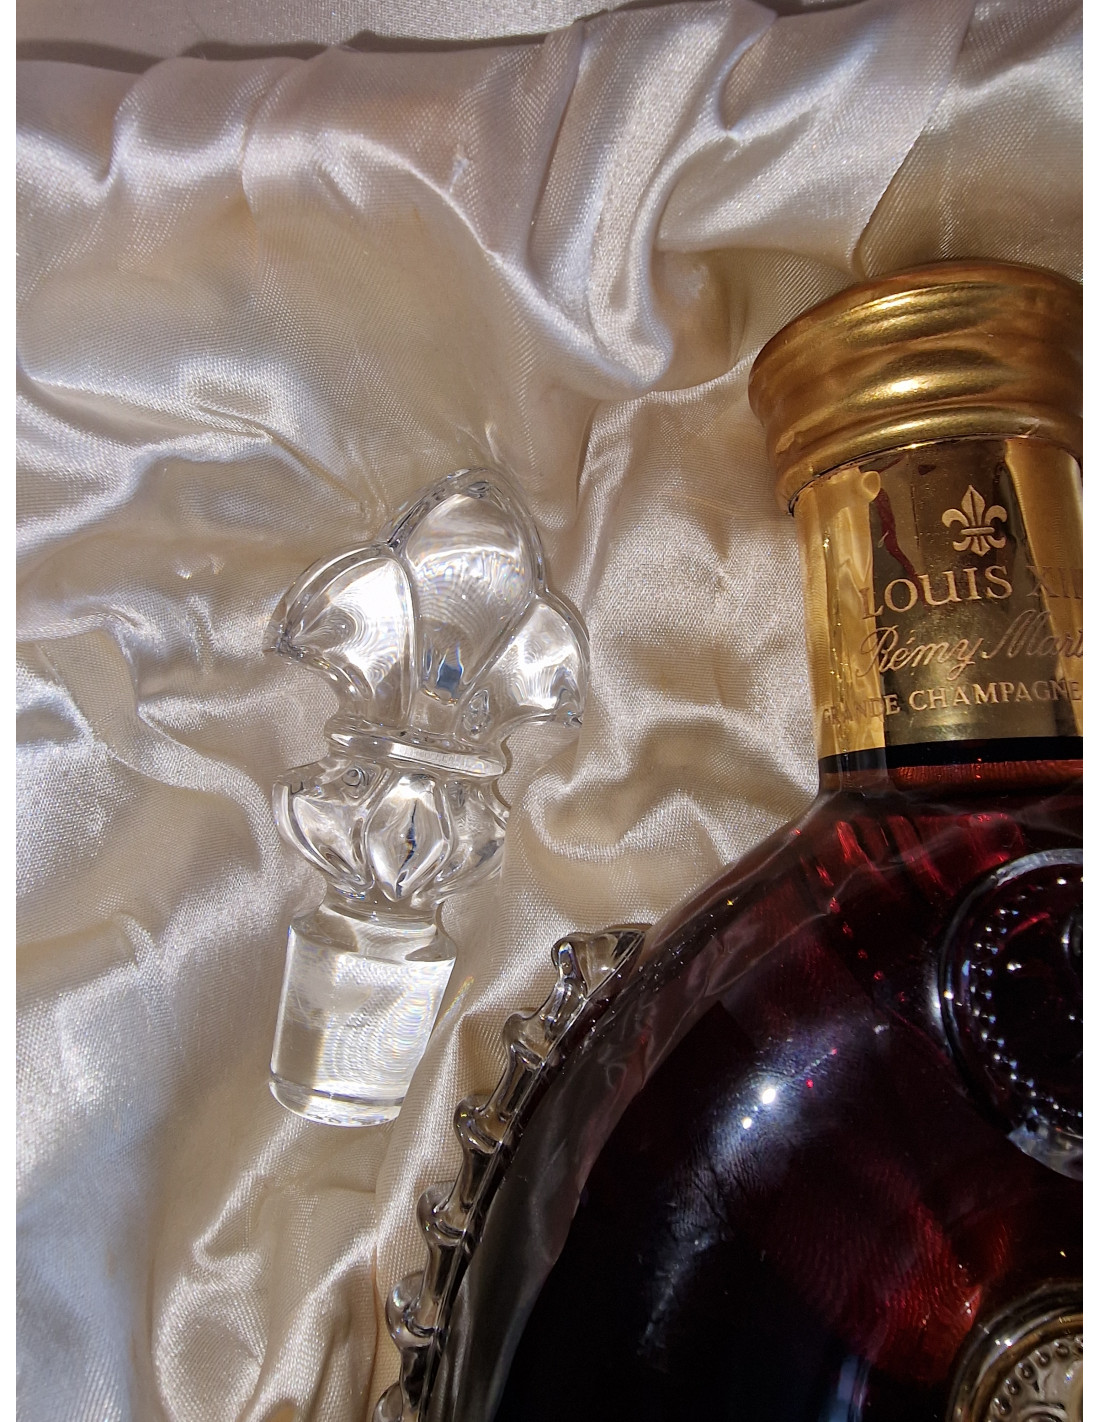 Remy Martin Louis XIII de Remy Martin Grande Champagne Cognac 175lt Bottle